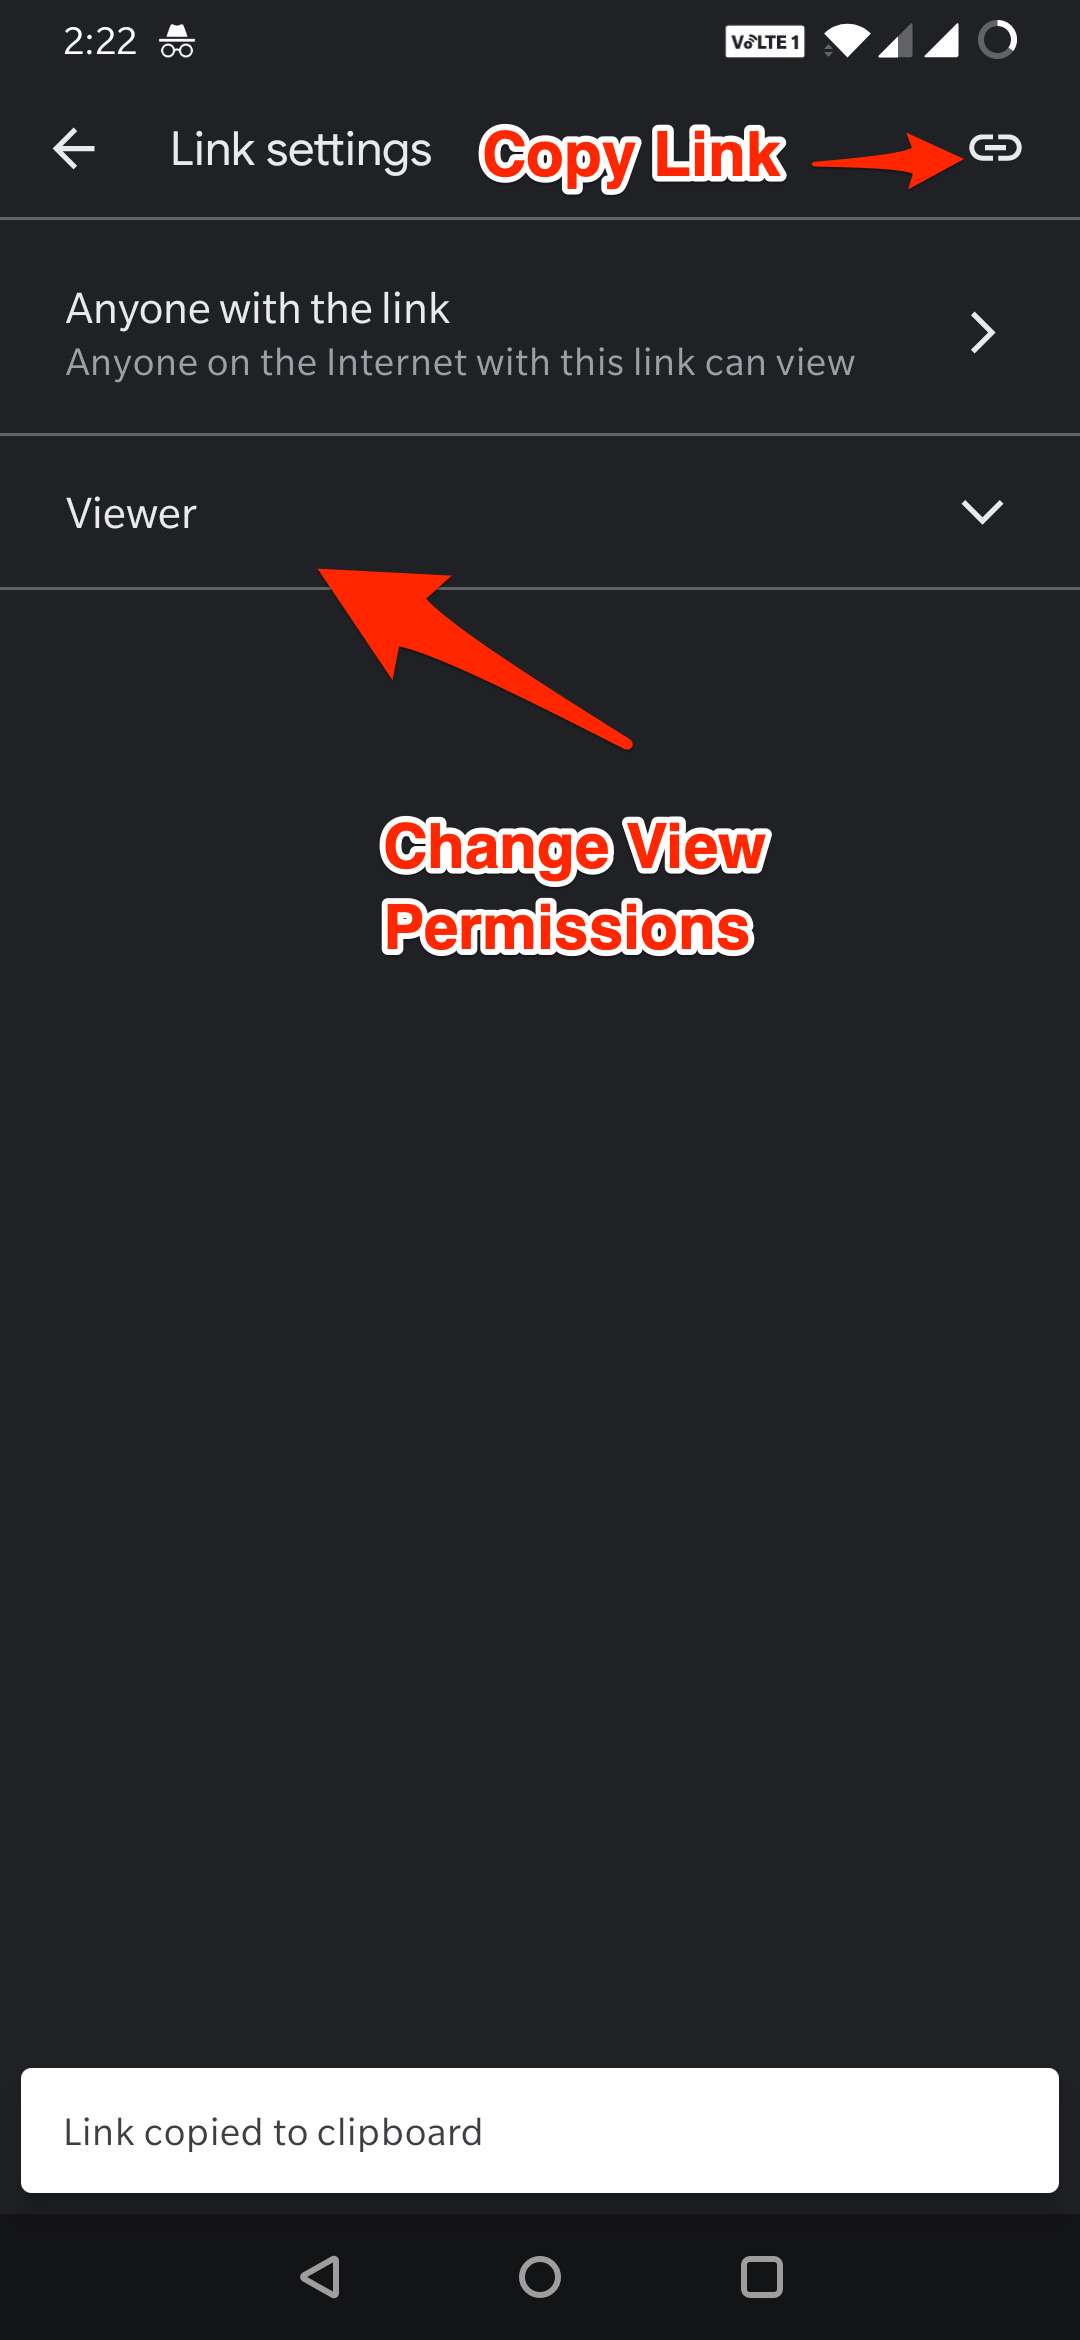 Change View Permissions